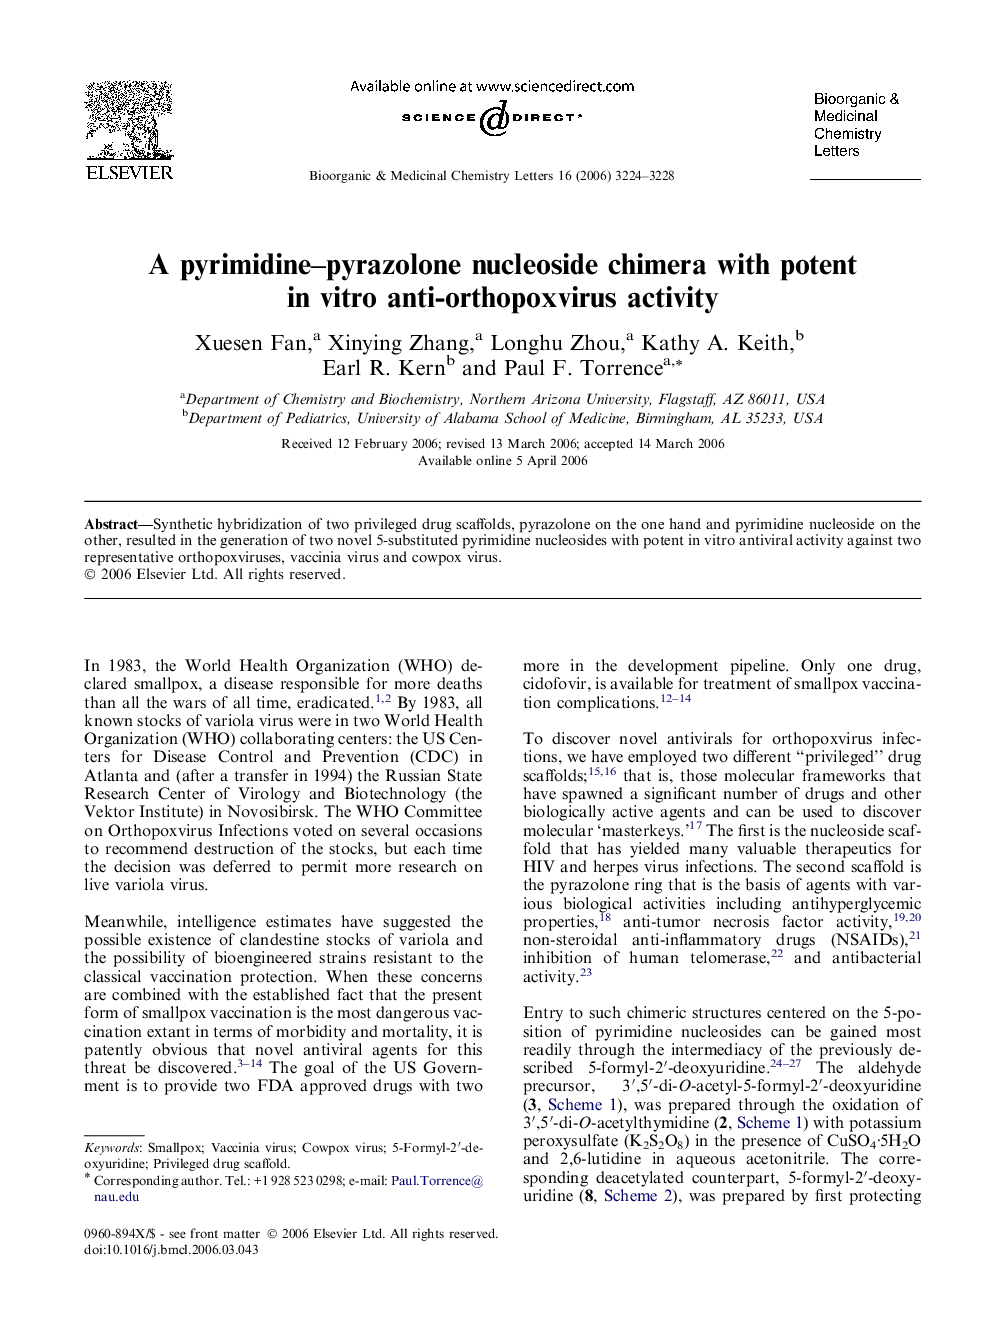 A pyrimidine–pyrazolone nucleoside chimera with potent in vitro anti-orthopoxvirus activity